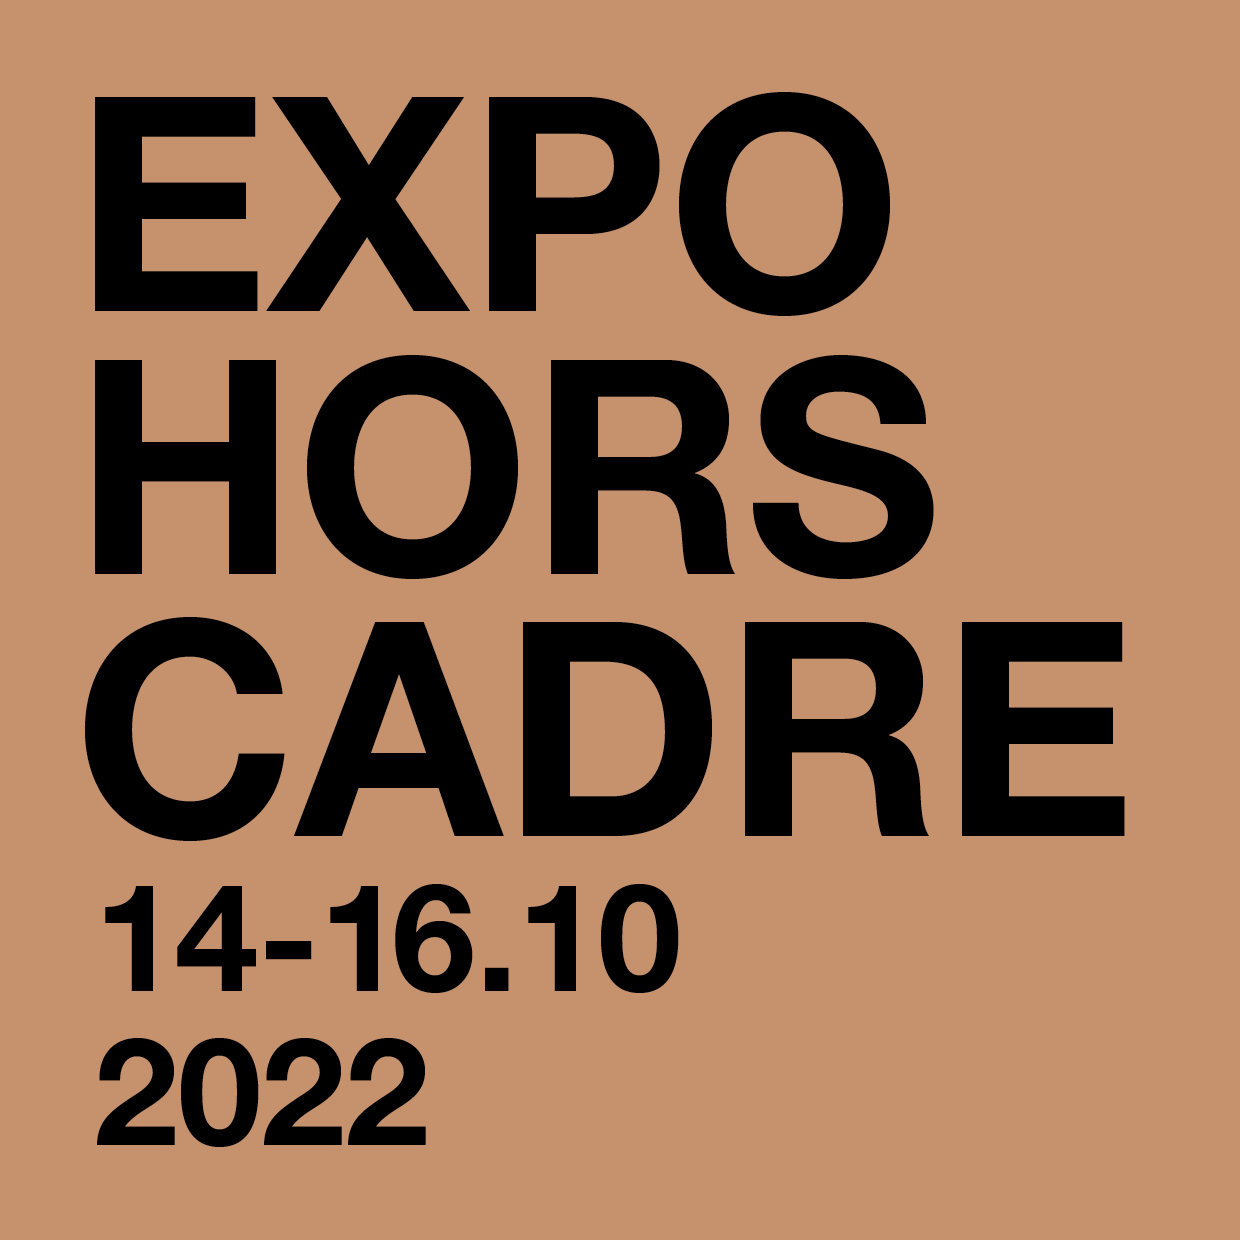 EXPO HORS CADRE 2022